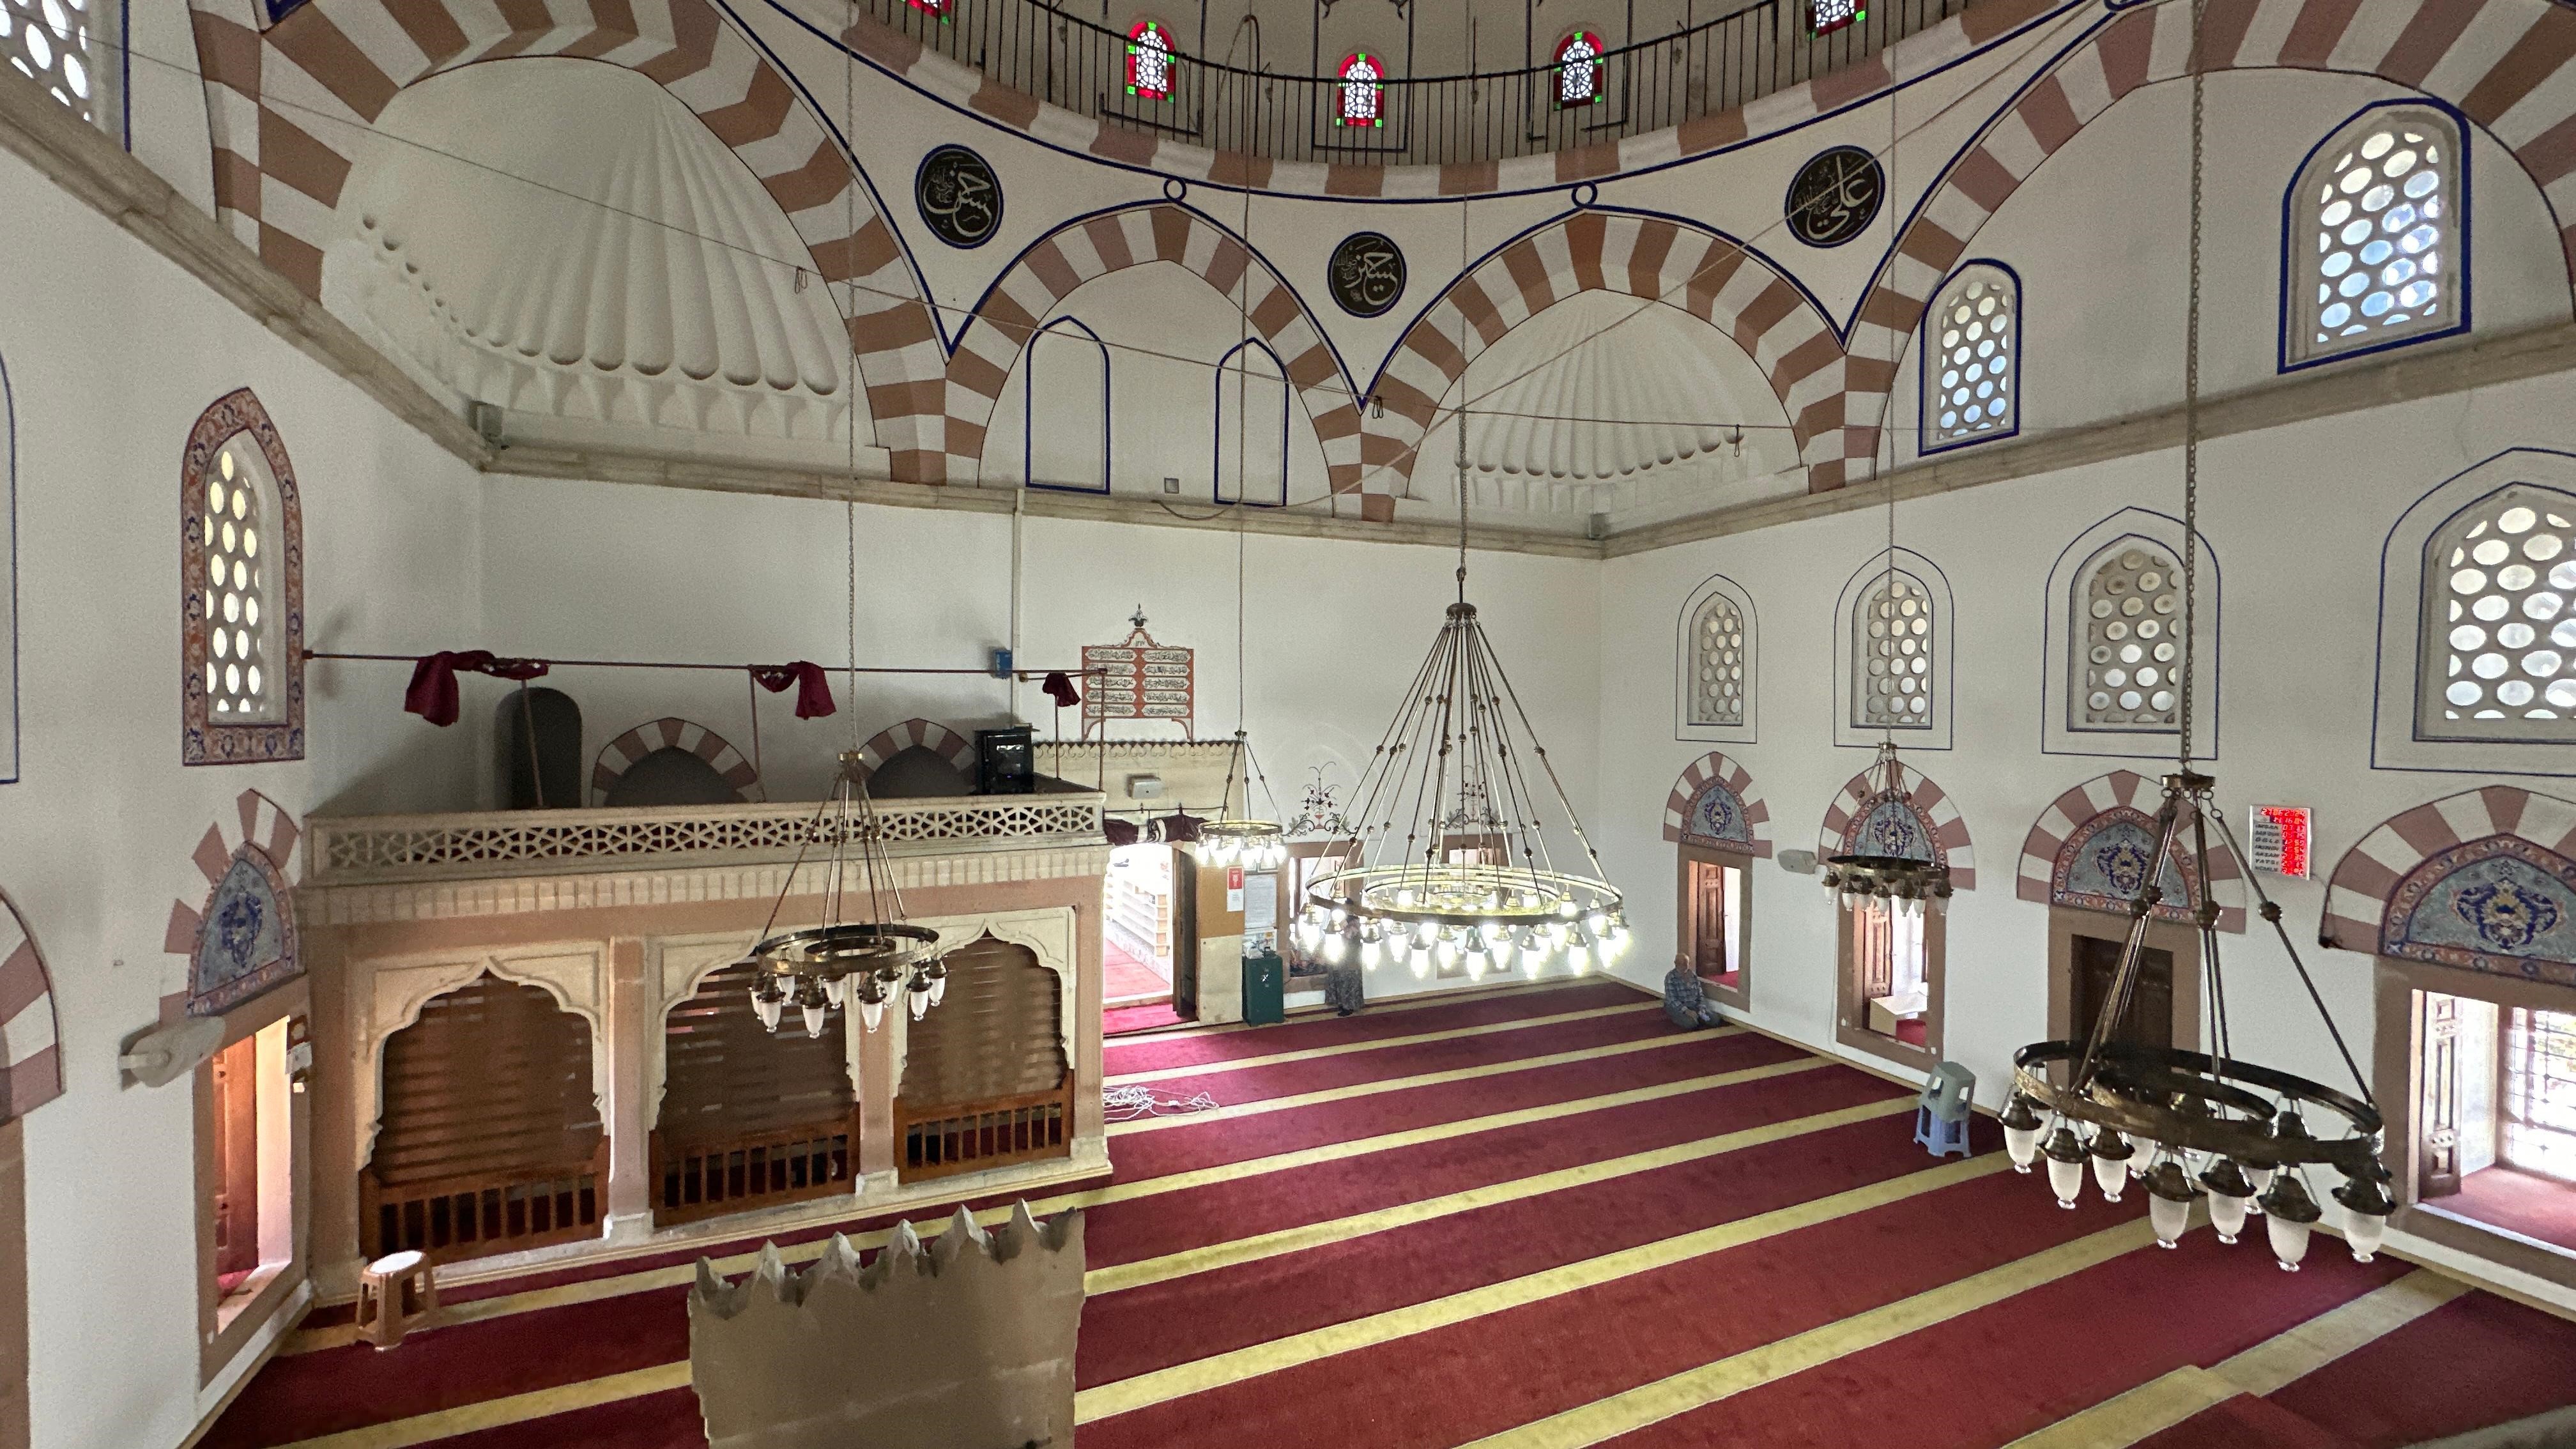 Cenab I Ahmet Paşa Camii Ankara'nın Klasik Osmanlı Mimarisi Mirası (3)